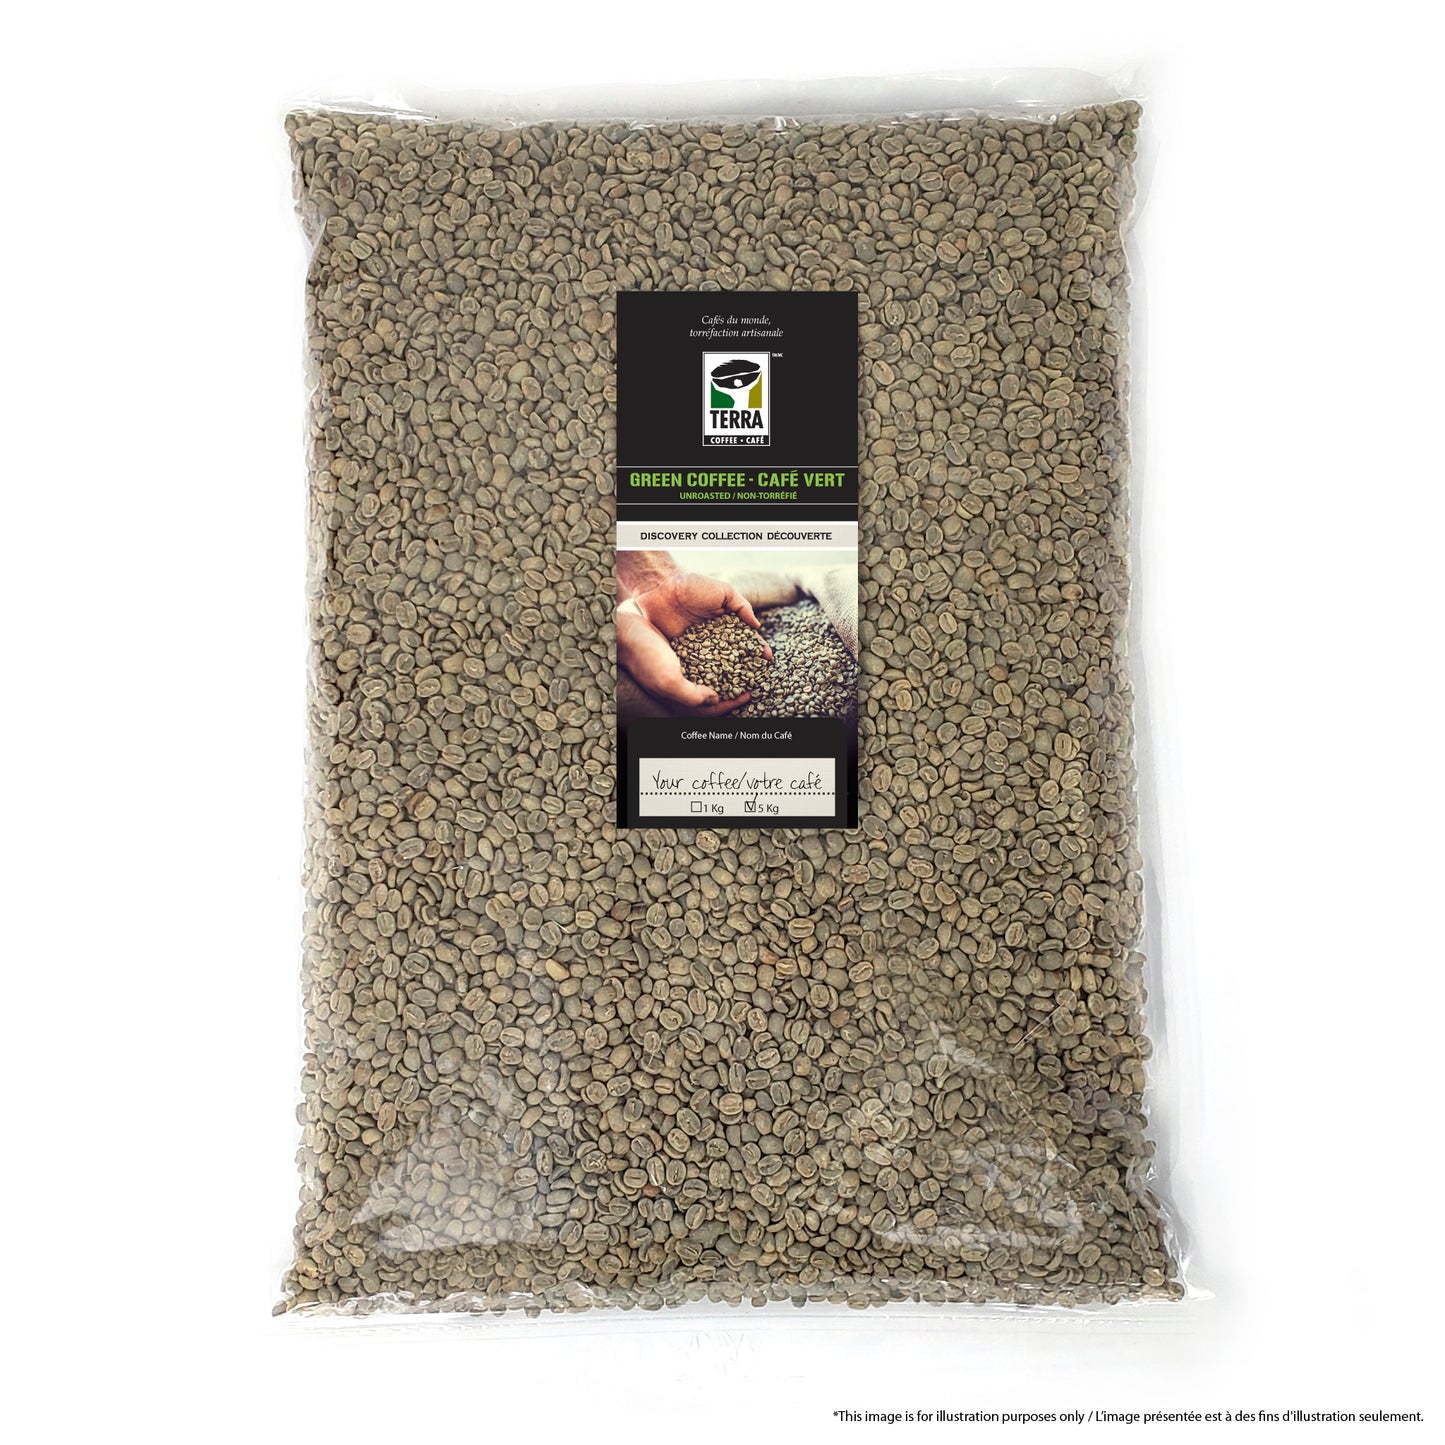 Indonesia Wild Kopi Luwak - Certified Humane - Green Coffee